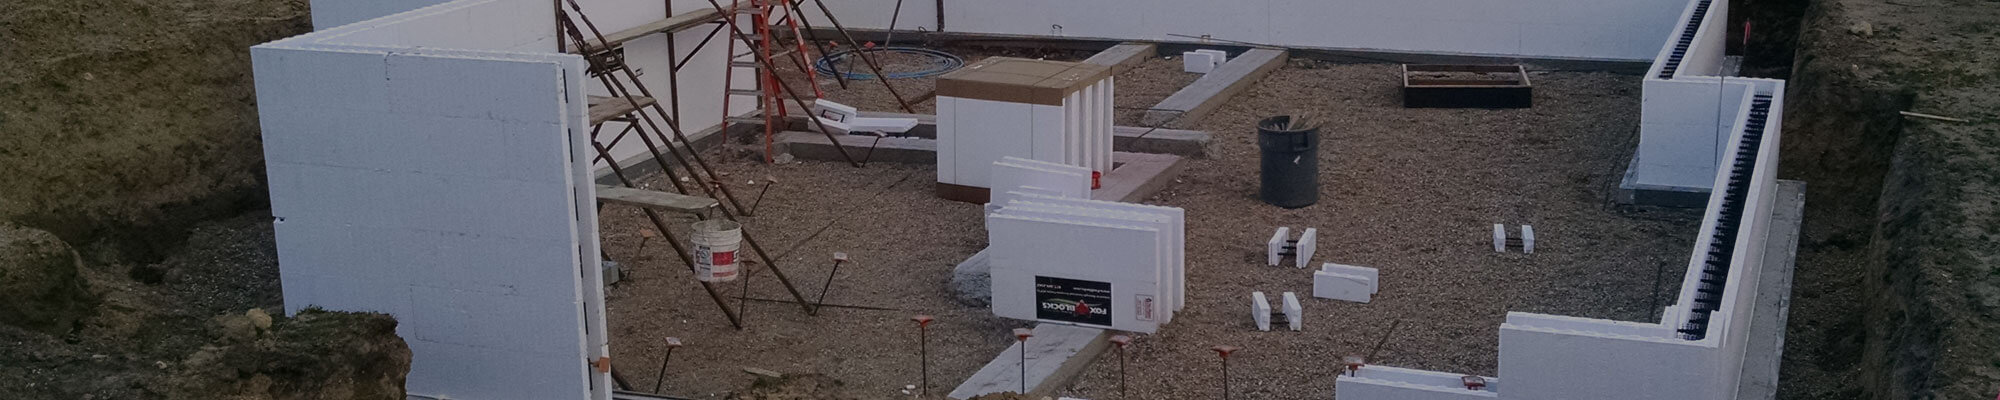 House Foundation setup using Insulated Concrete Forms